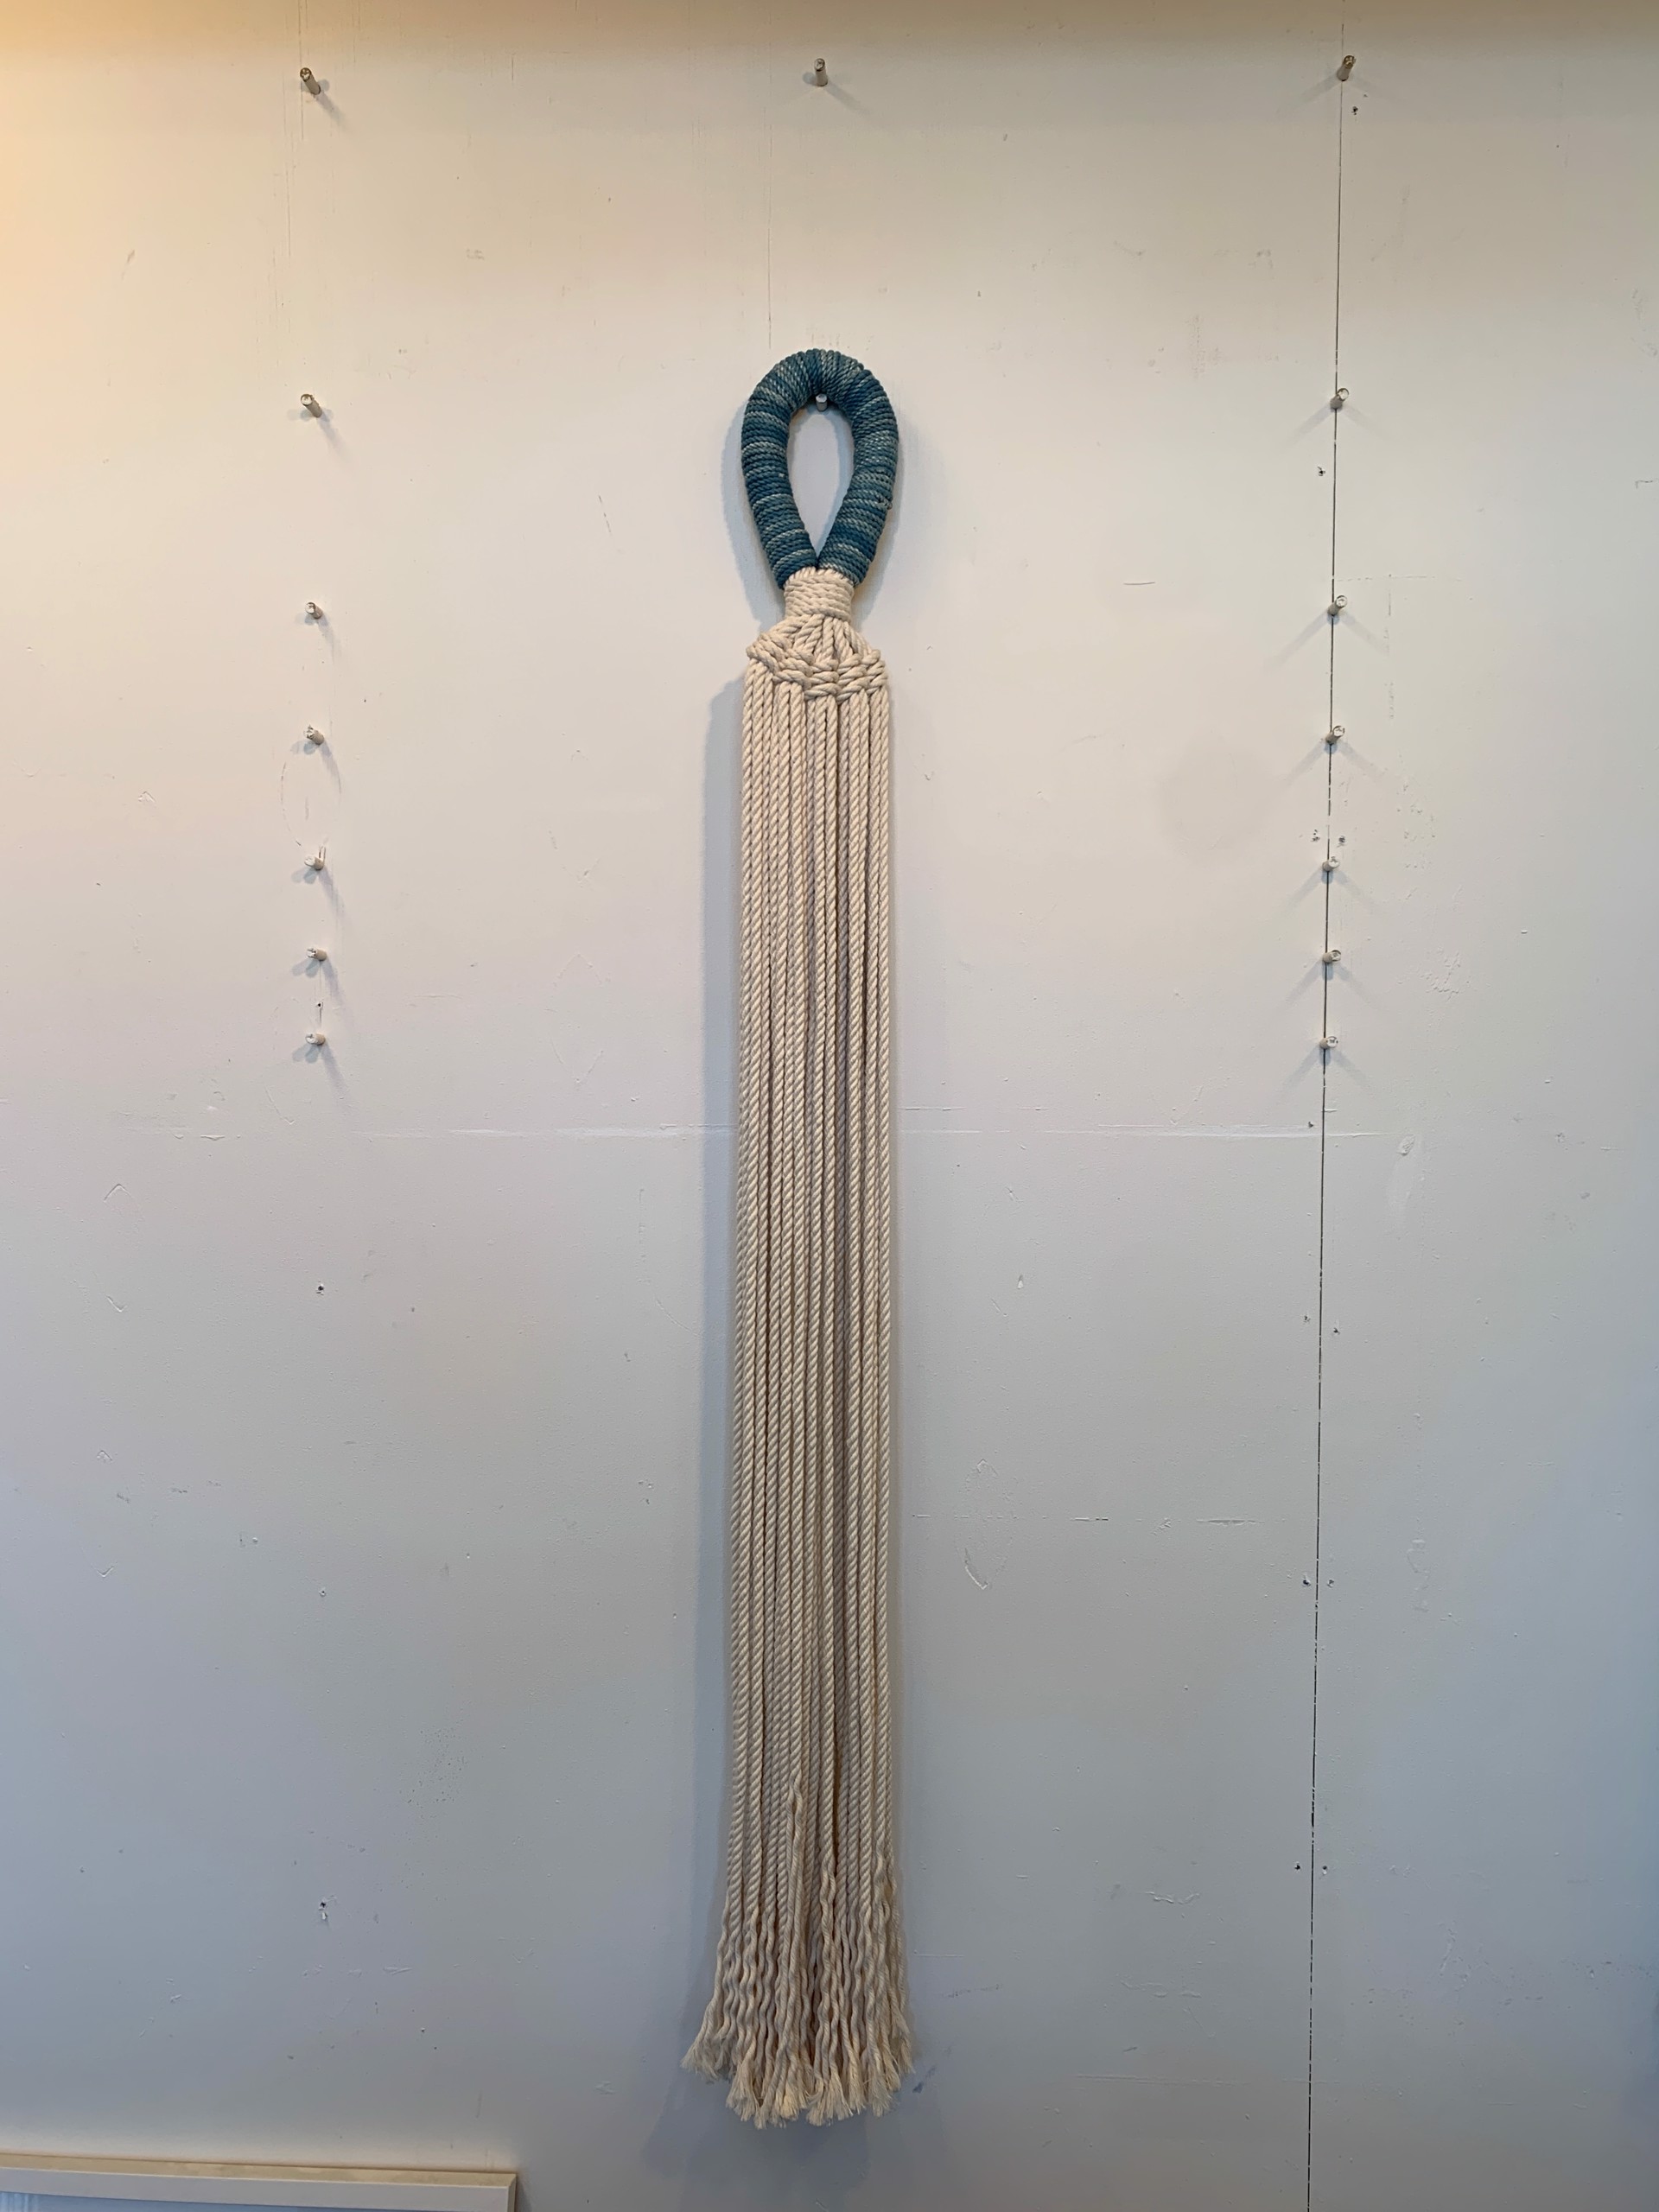 Rope Sculpture 1 by Liz Robb